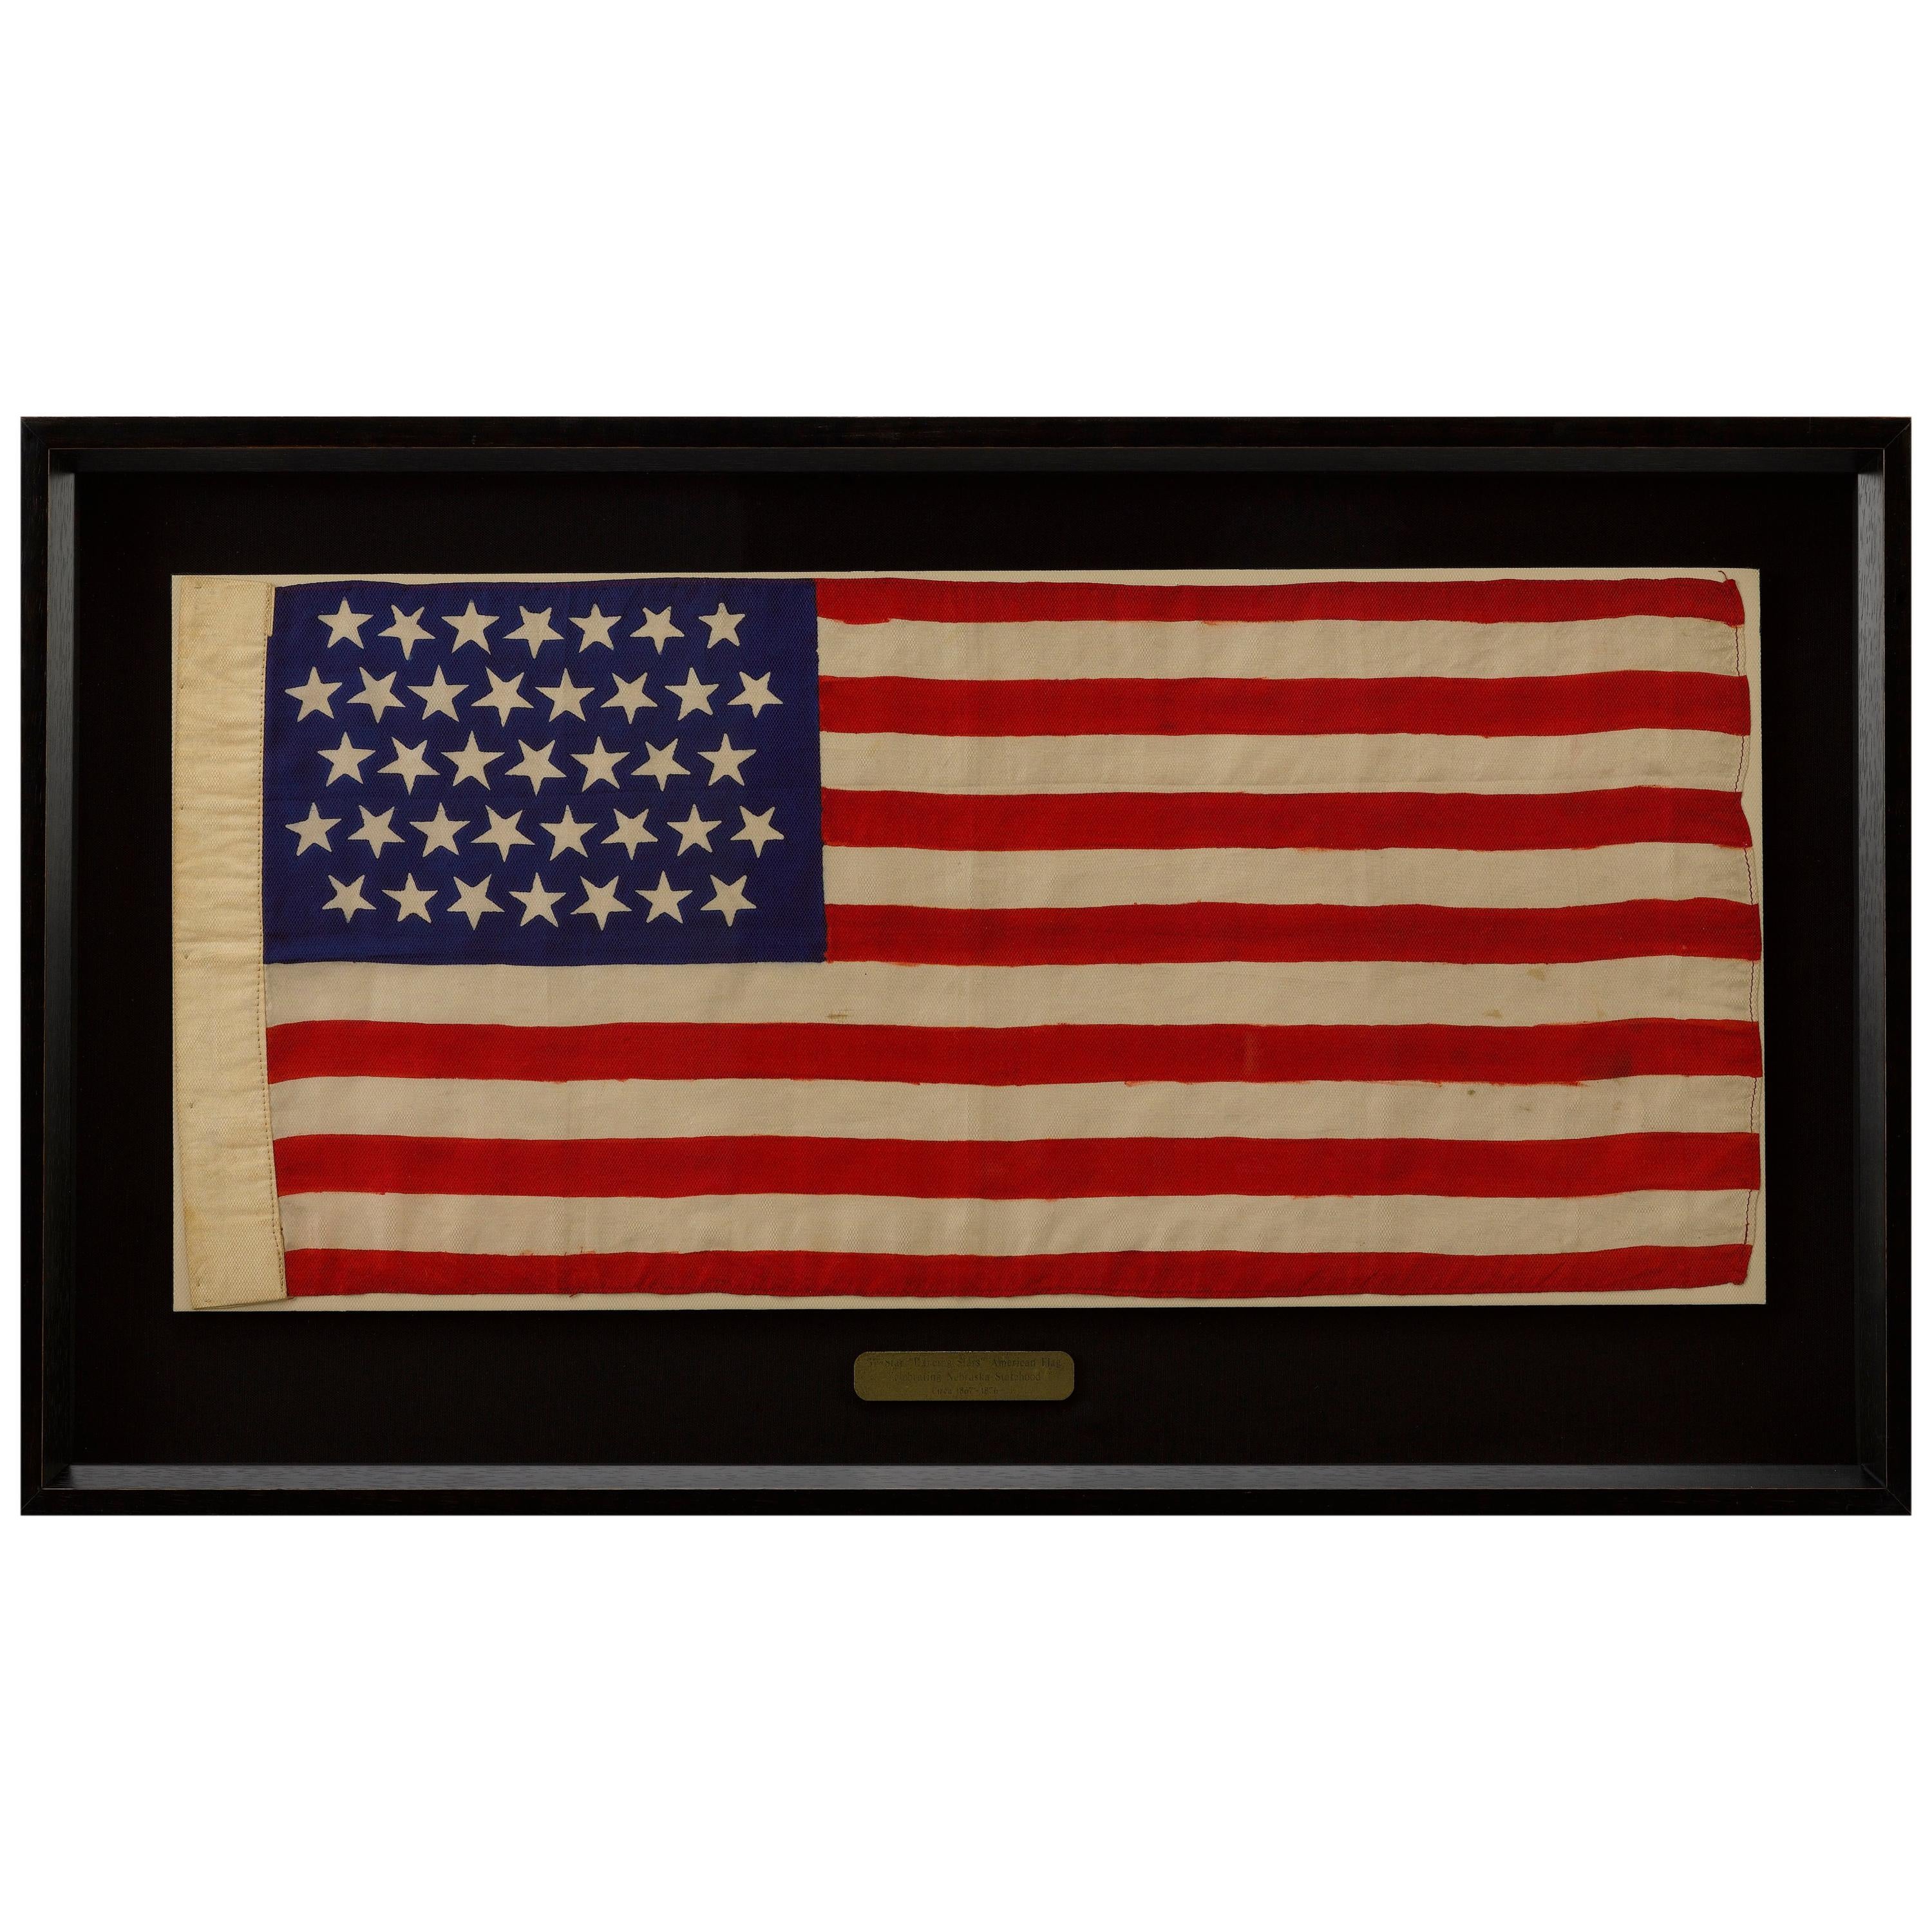 37-Star "Dancing Stars" American Flag, Celebrating Nebraska Statehood, 1867-1876